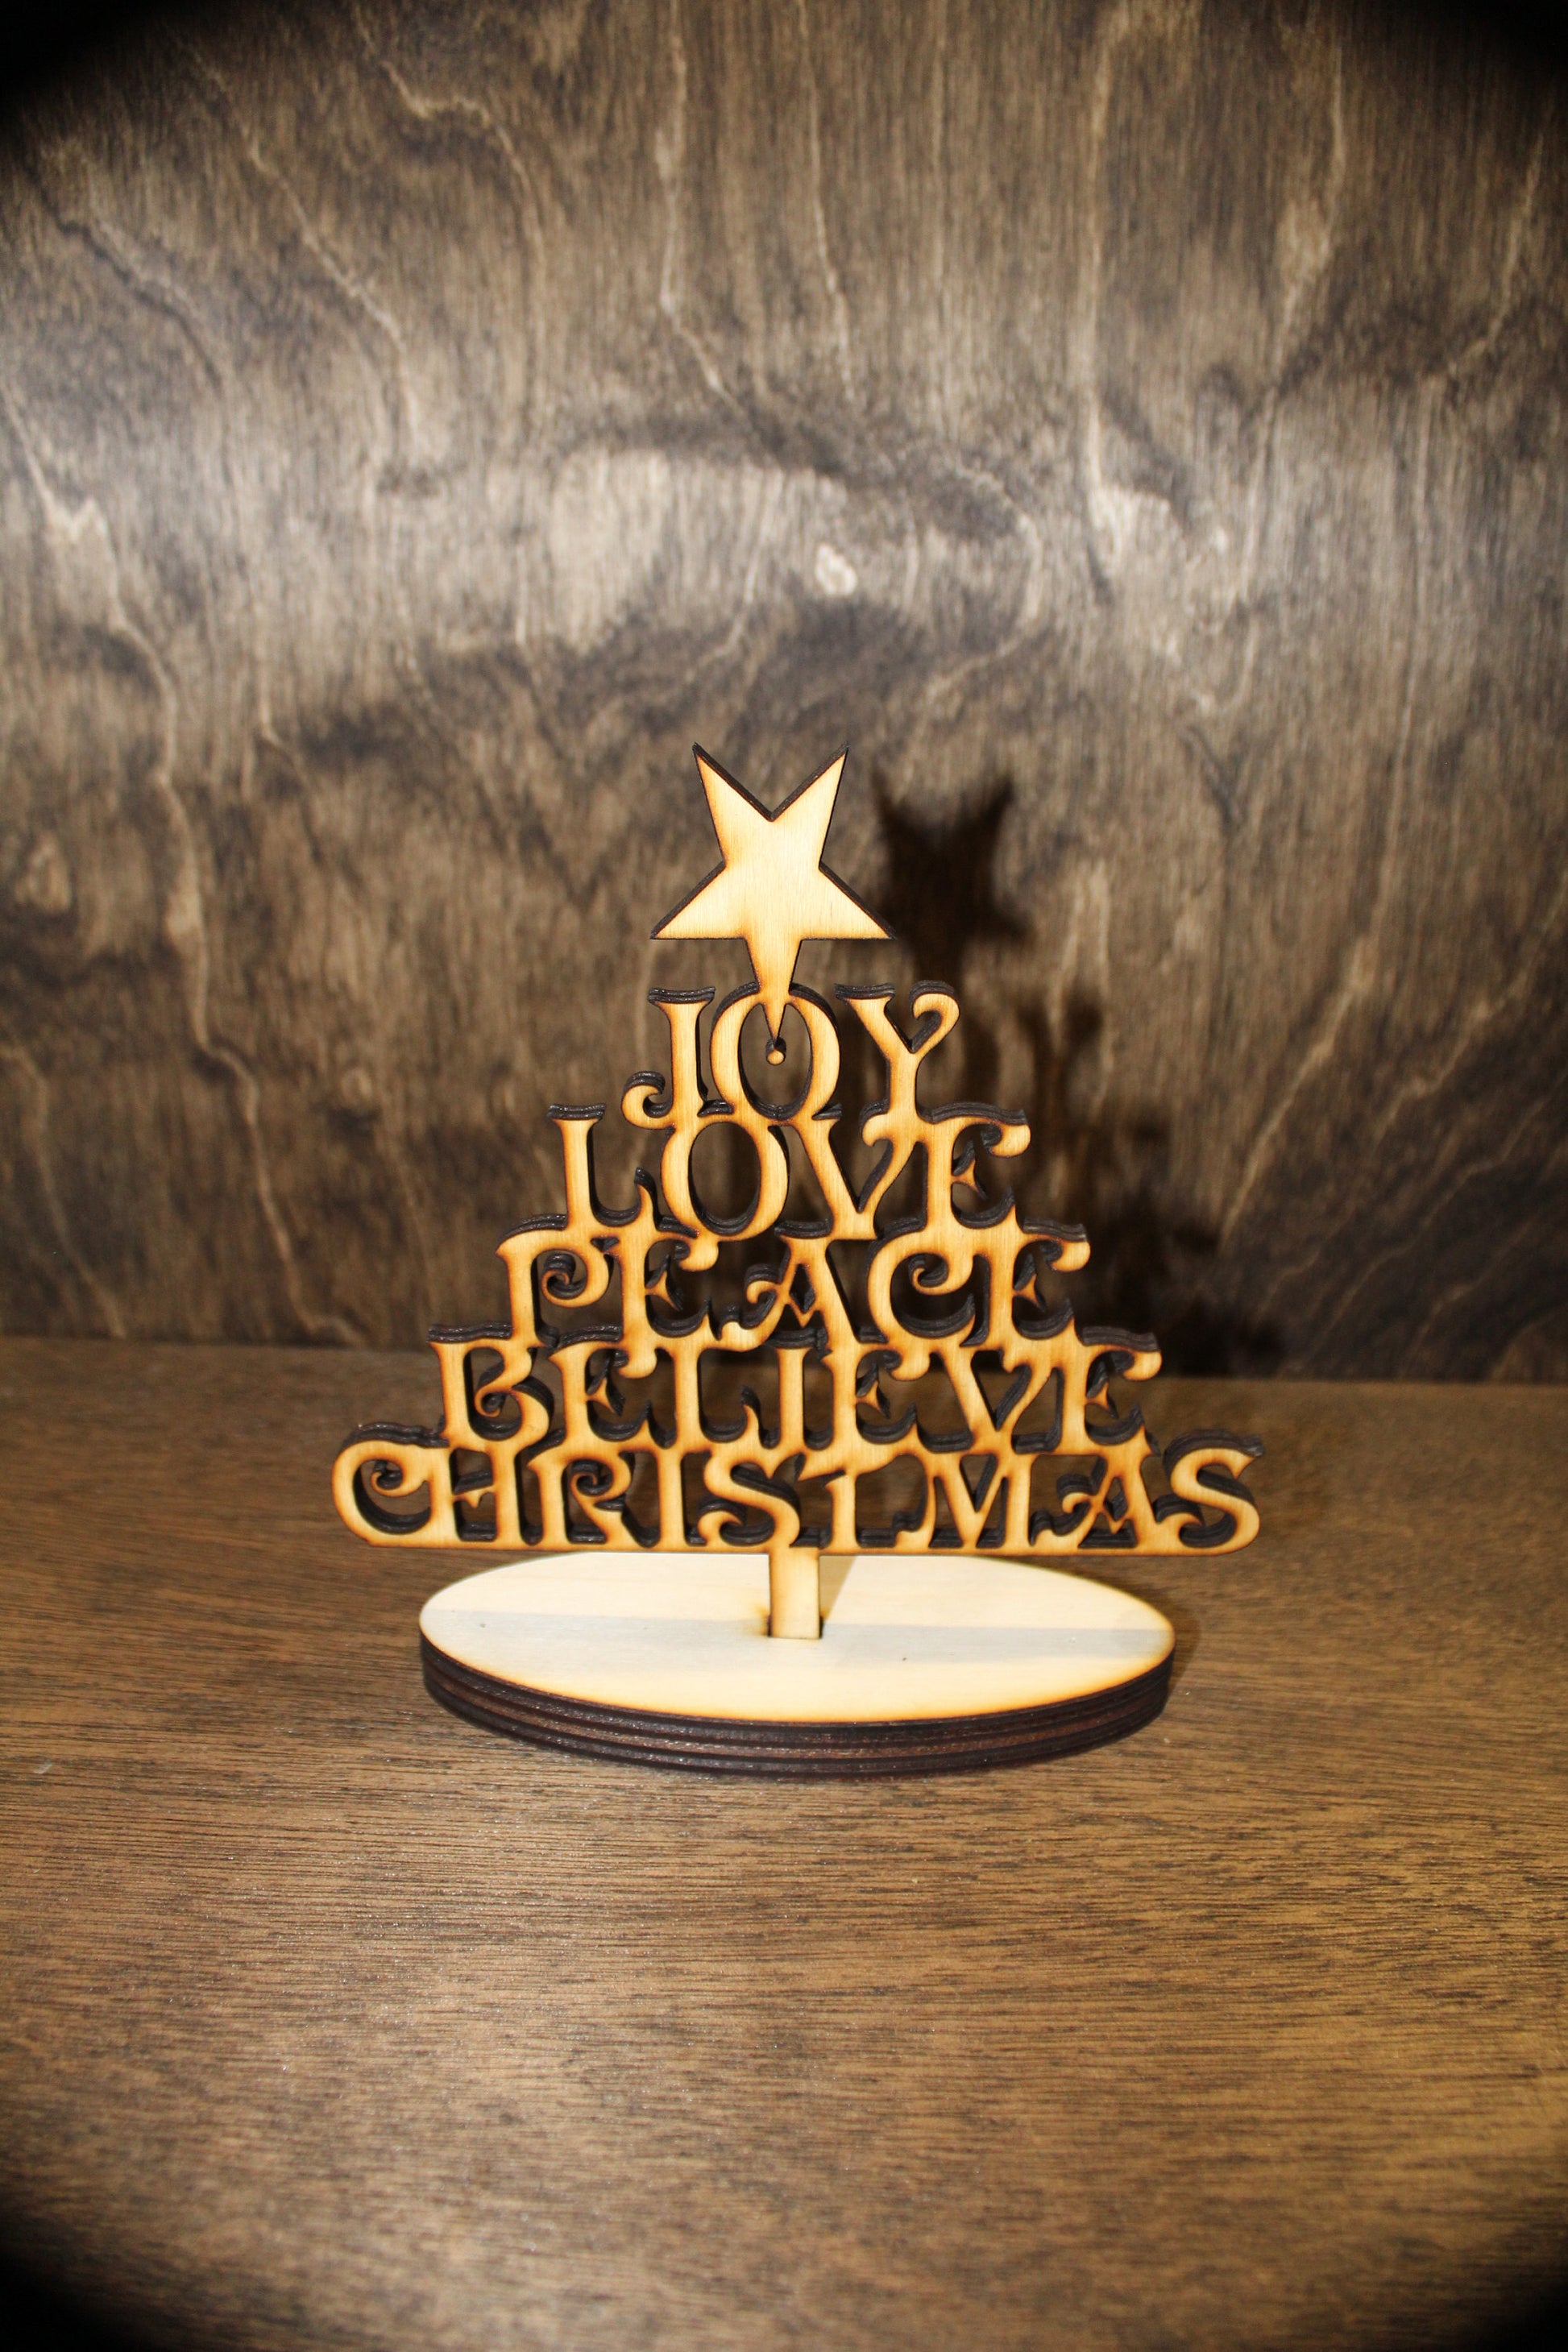 Free Standing Christmas Tree Wood Shelf Sitter Stand 3D Text Joy Love Peace Believe  DIY Wood Word Laser Cut Wooden Decor Birch